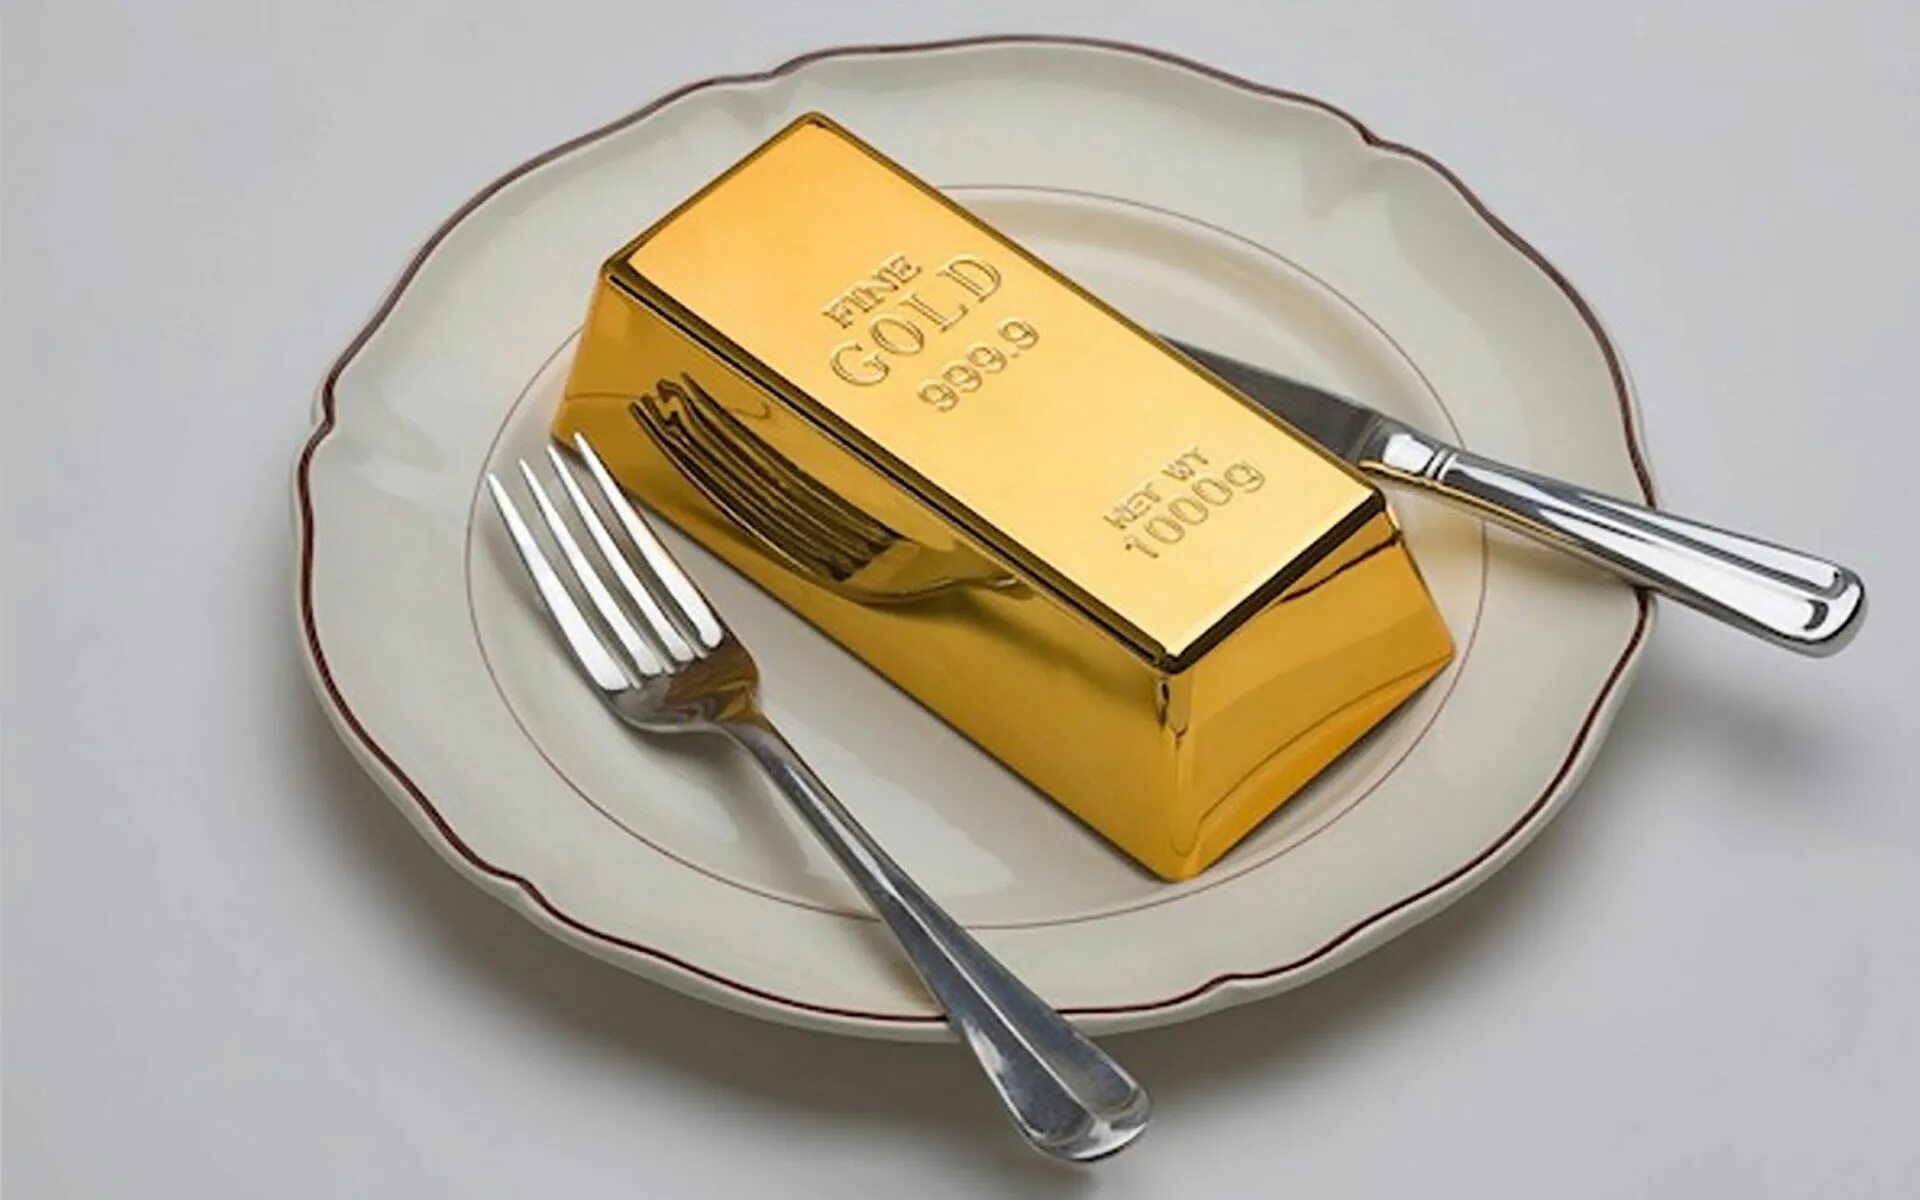 A lot expensive. Слиток золота на тарелке. Пищевое золото. Торт золотой слиток. Дорогие вещи.